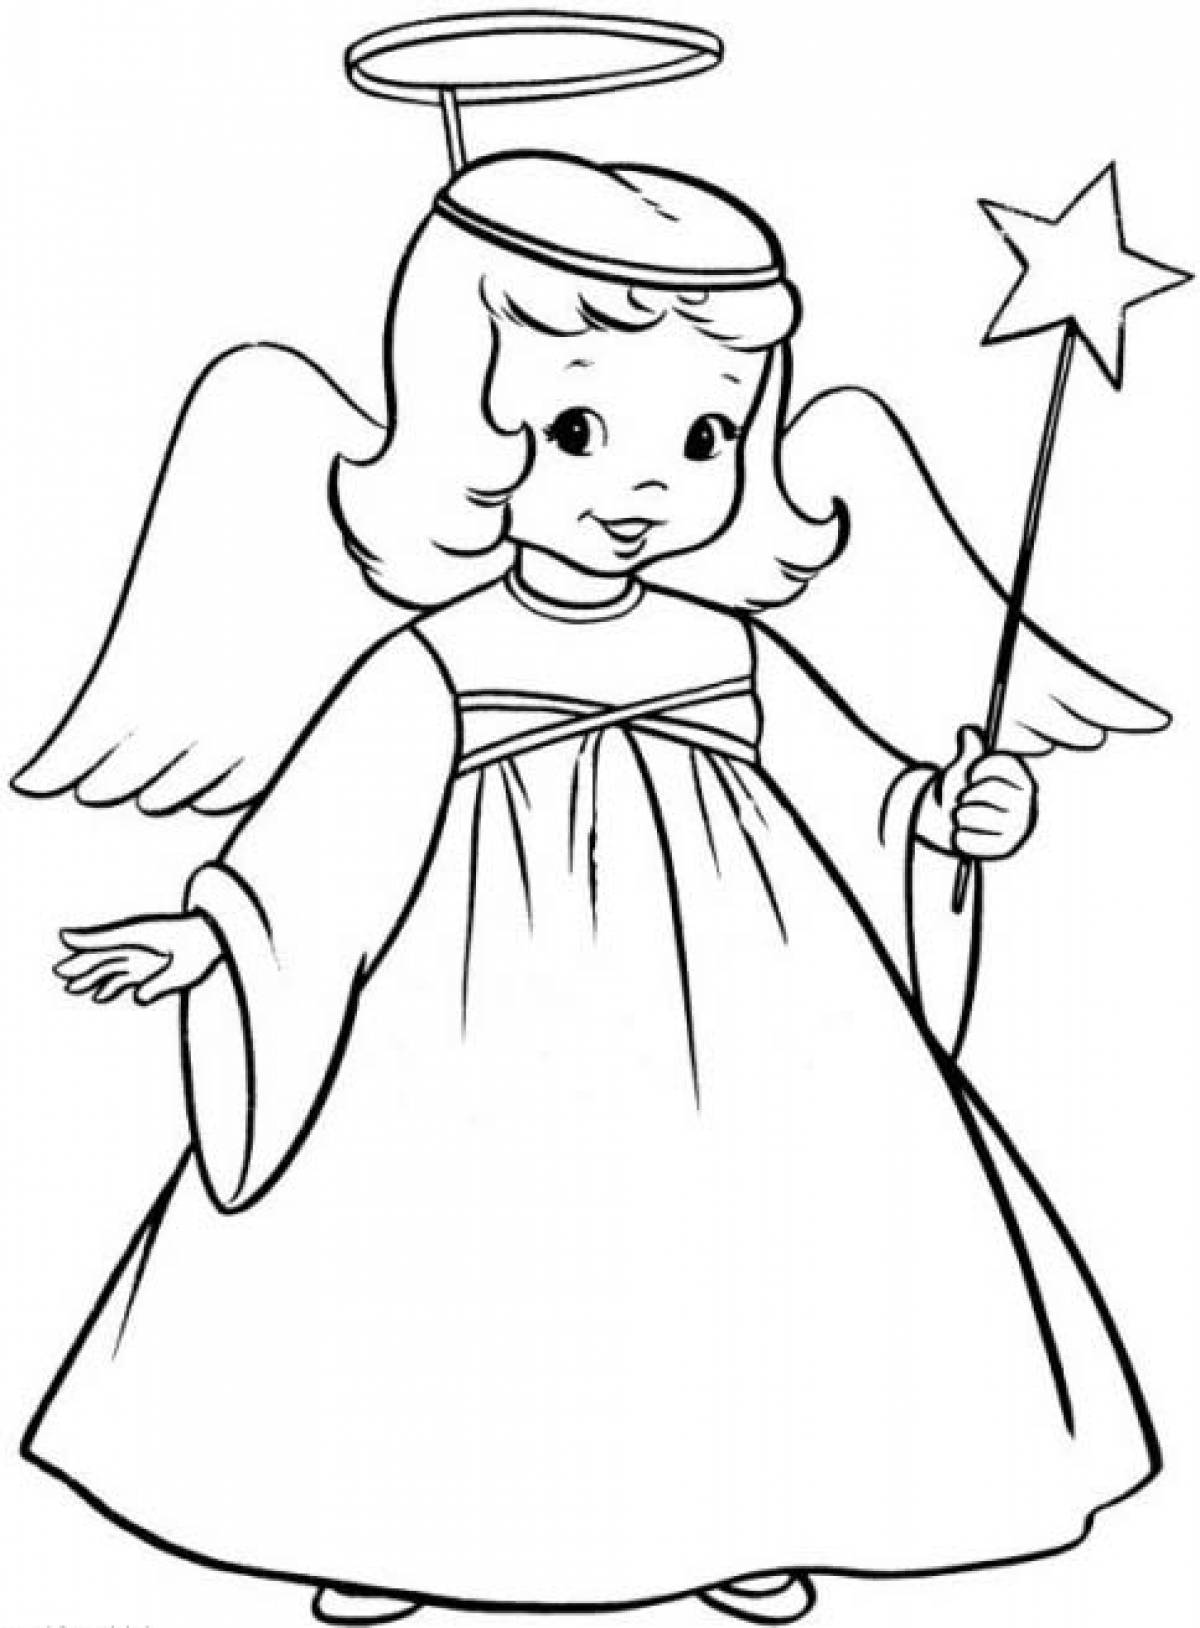 Angel with a magic wand